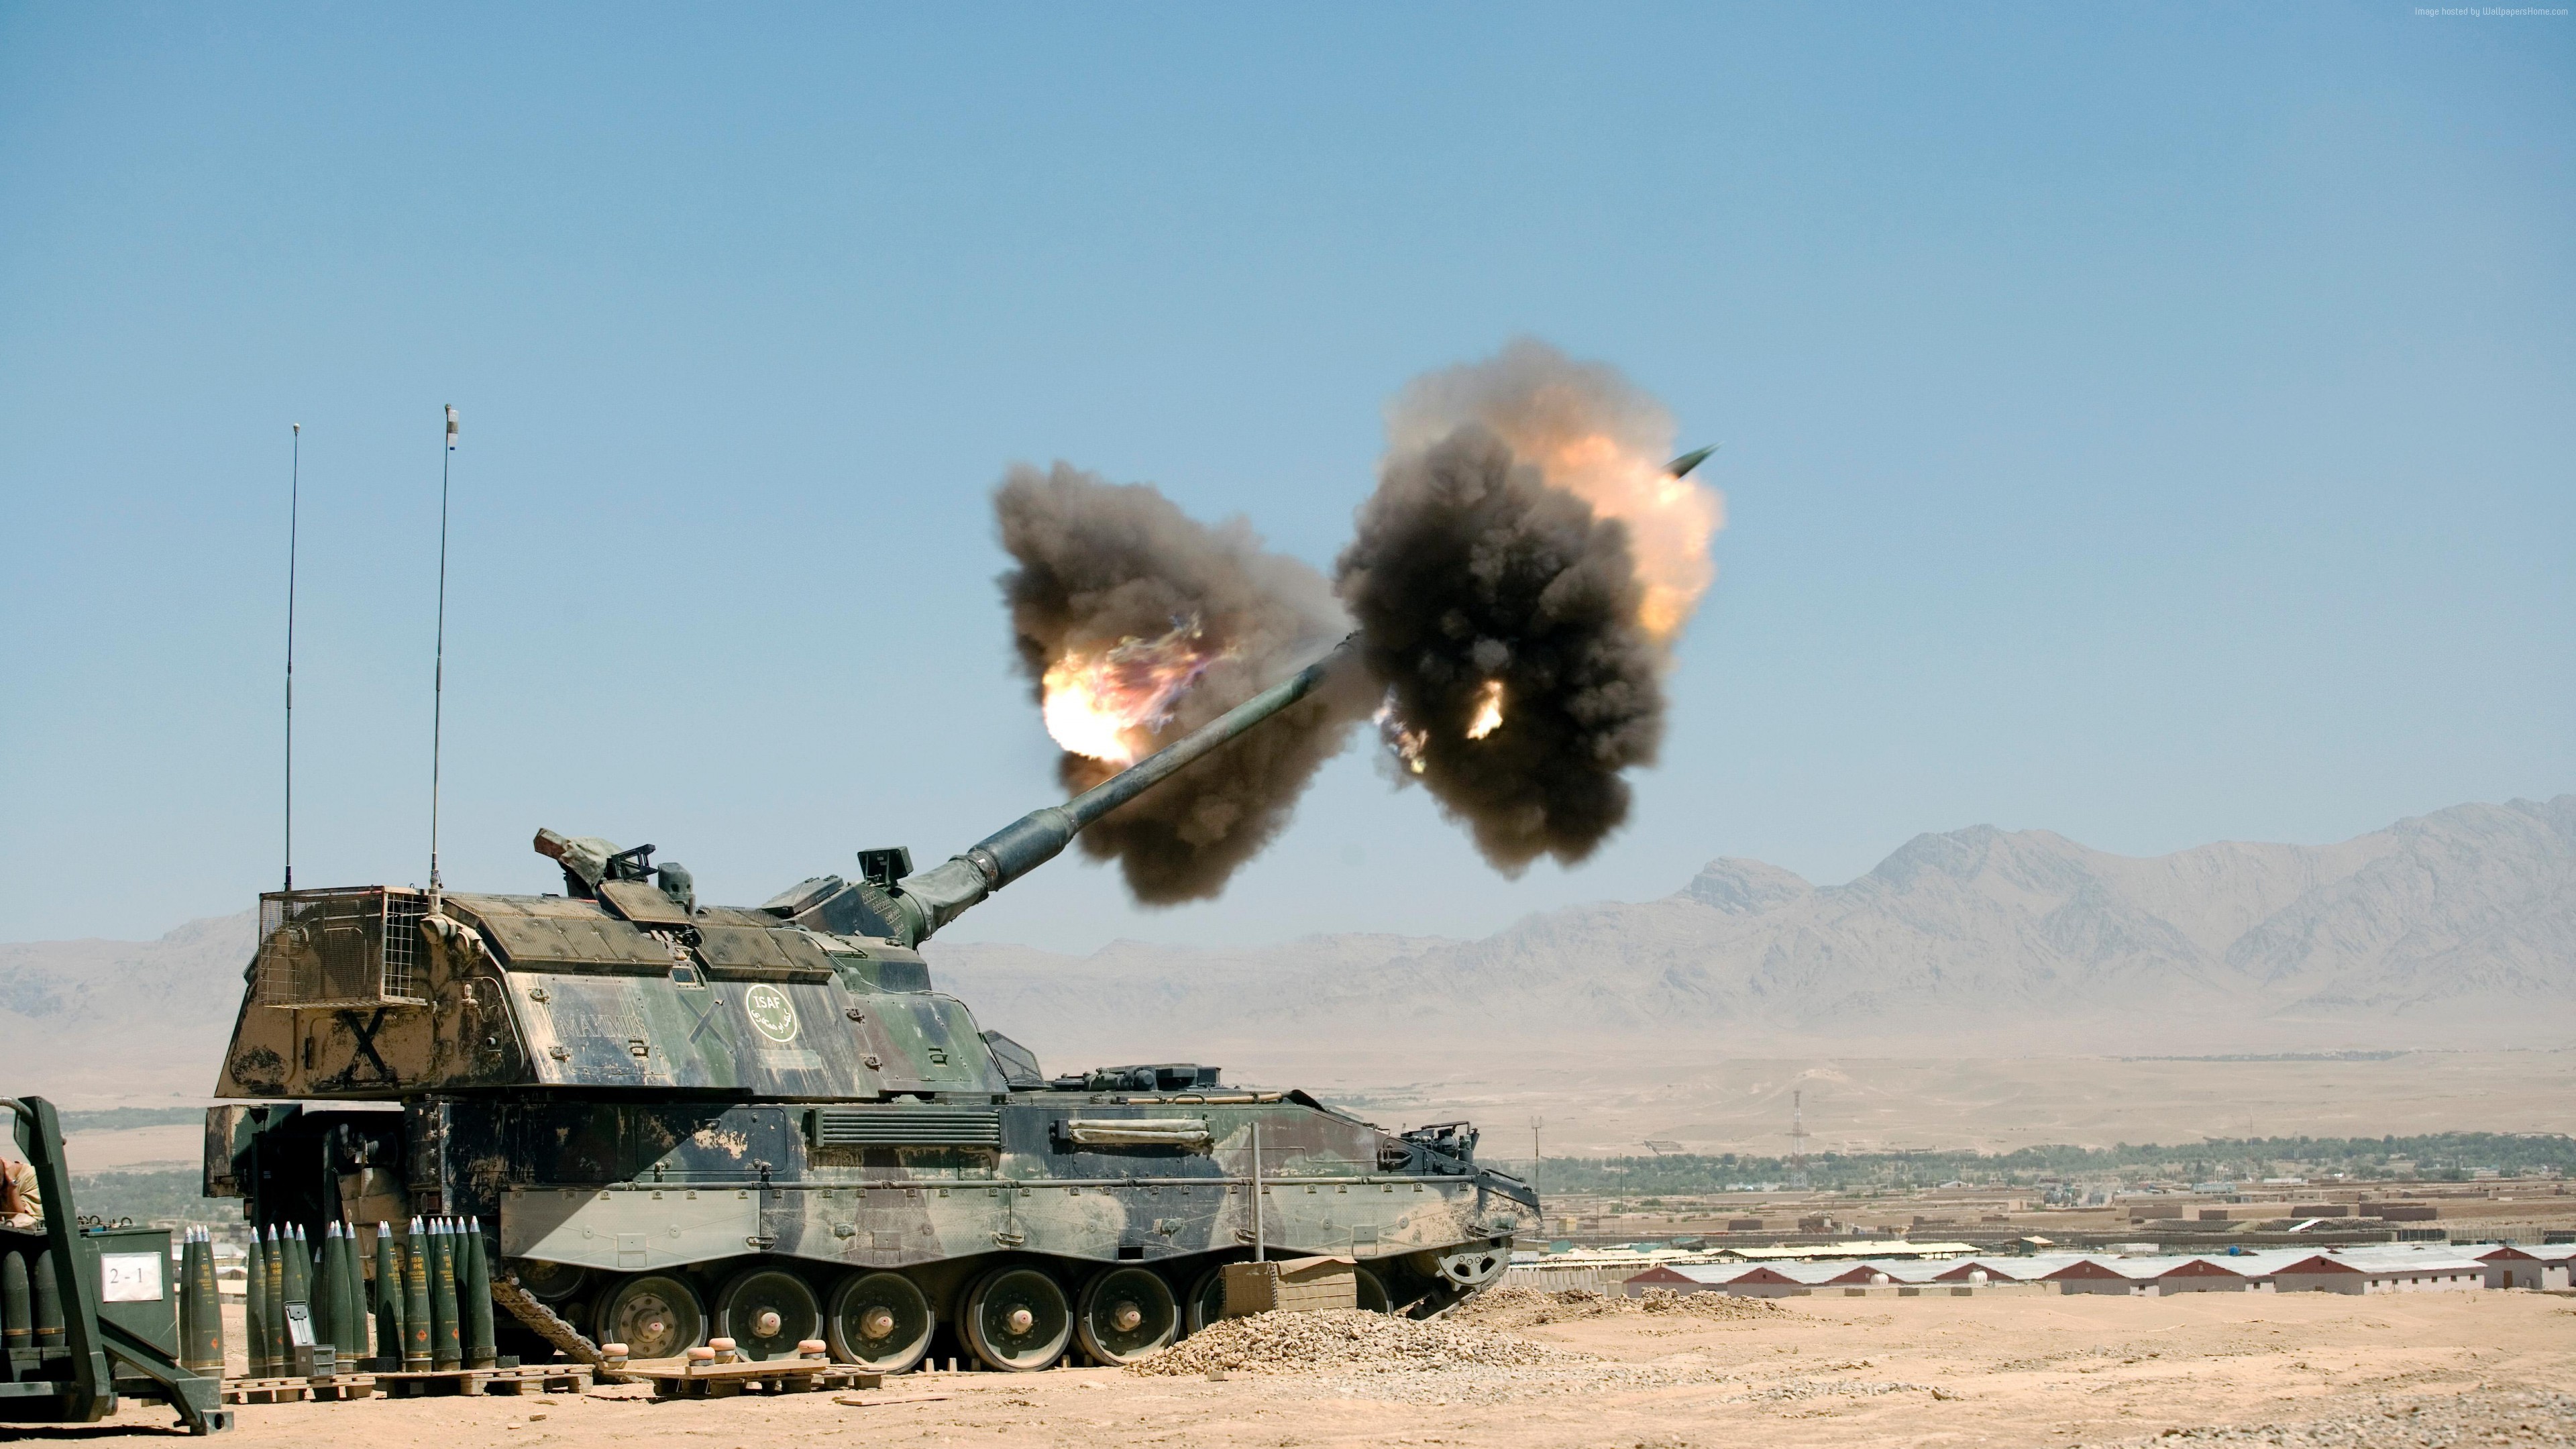 General 3840x2160 battle war Panzerhaubitze 2000 artillery army tank ISAF military Afghanistan War in Afghanistan